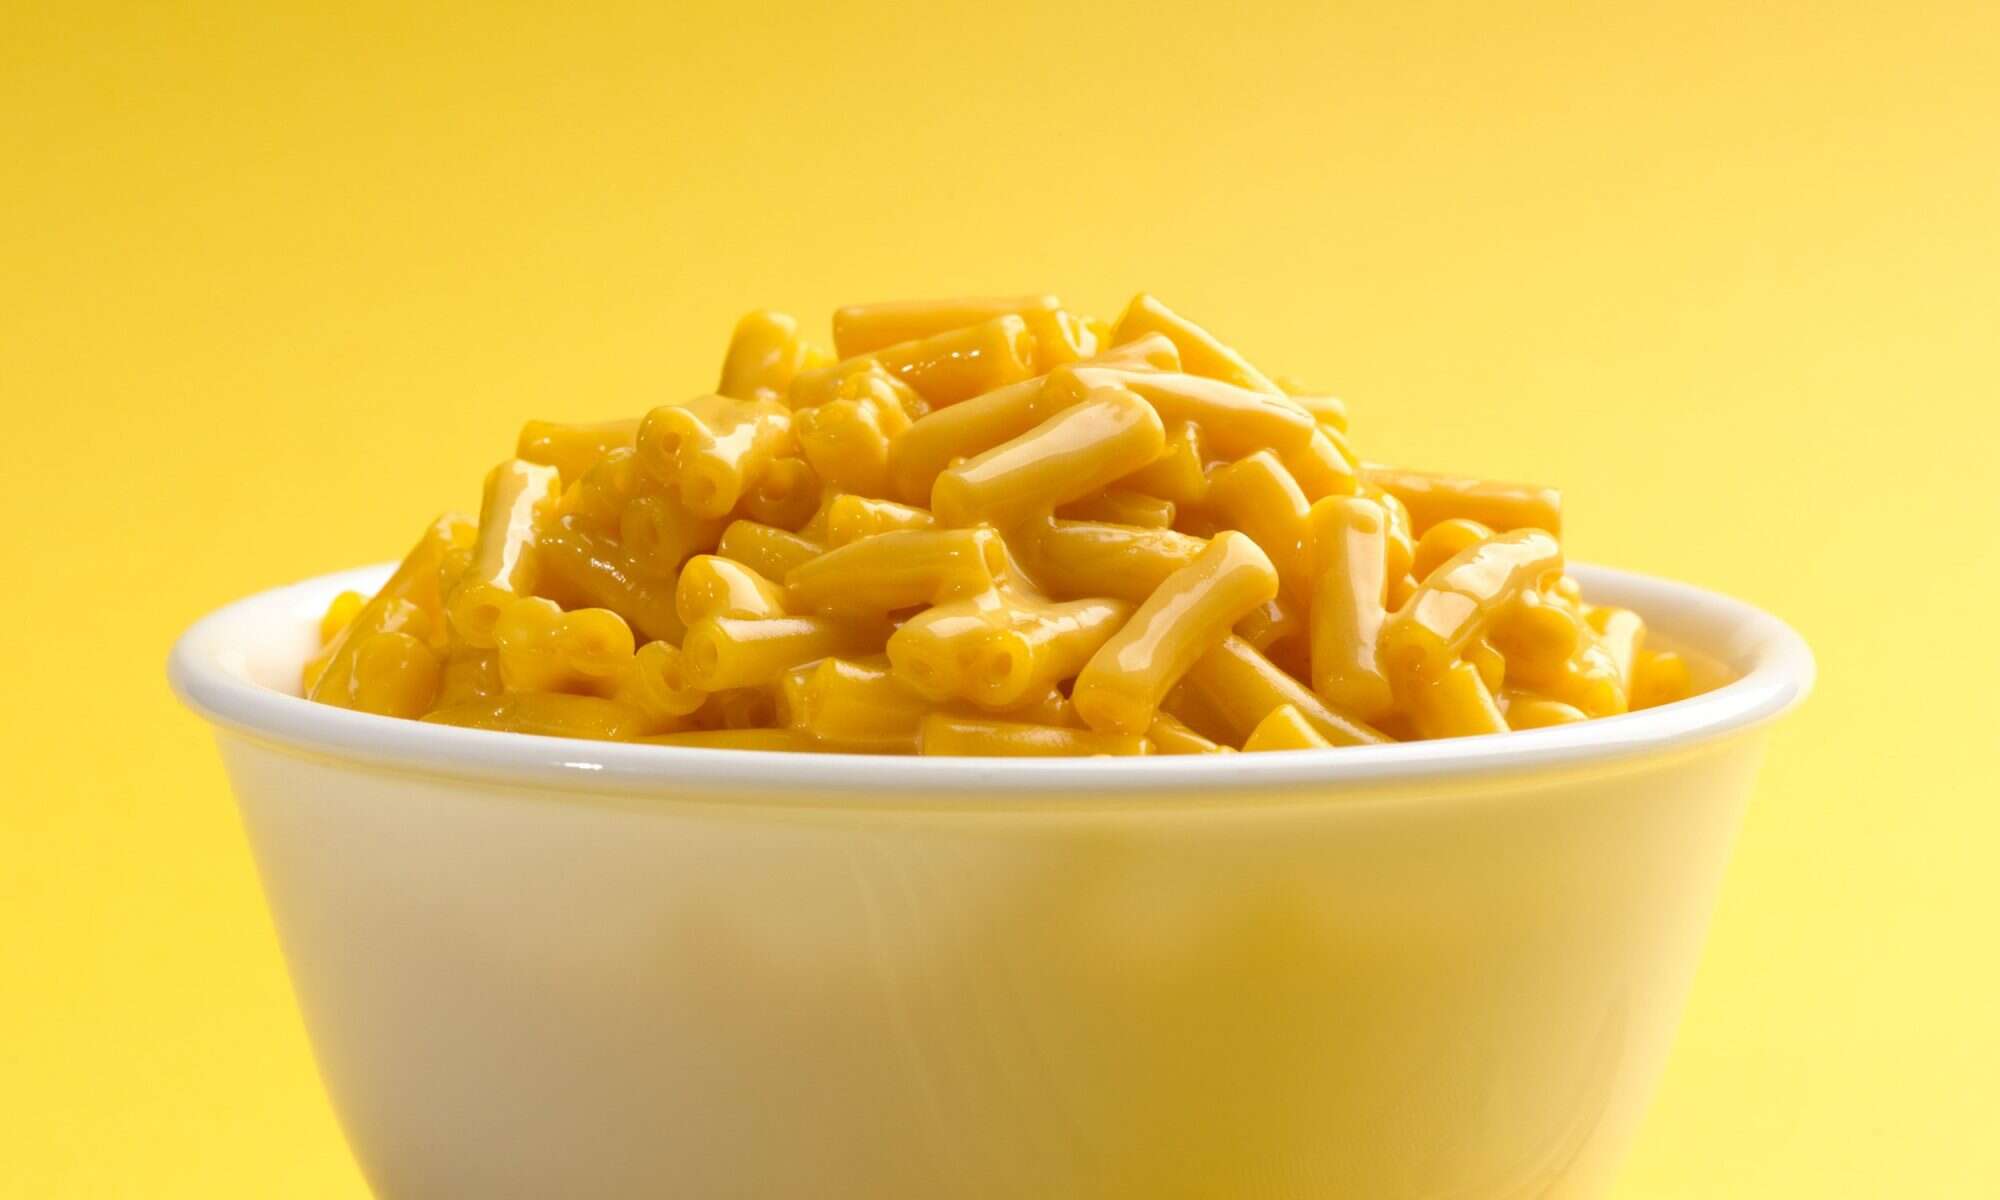 What Is in Kraft Mac & Cheese?